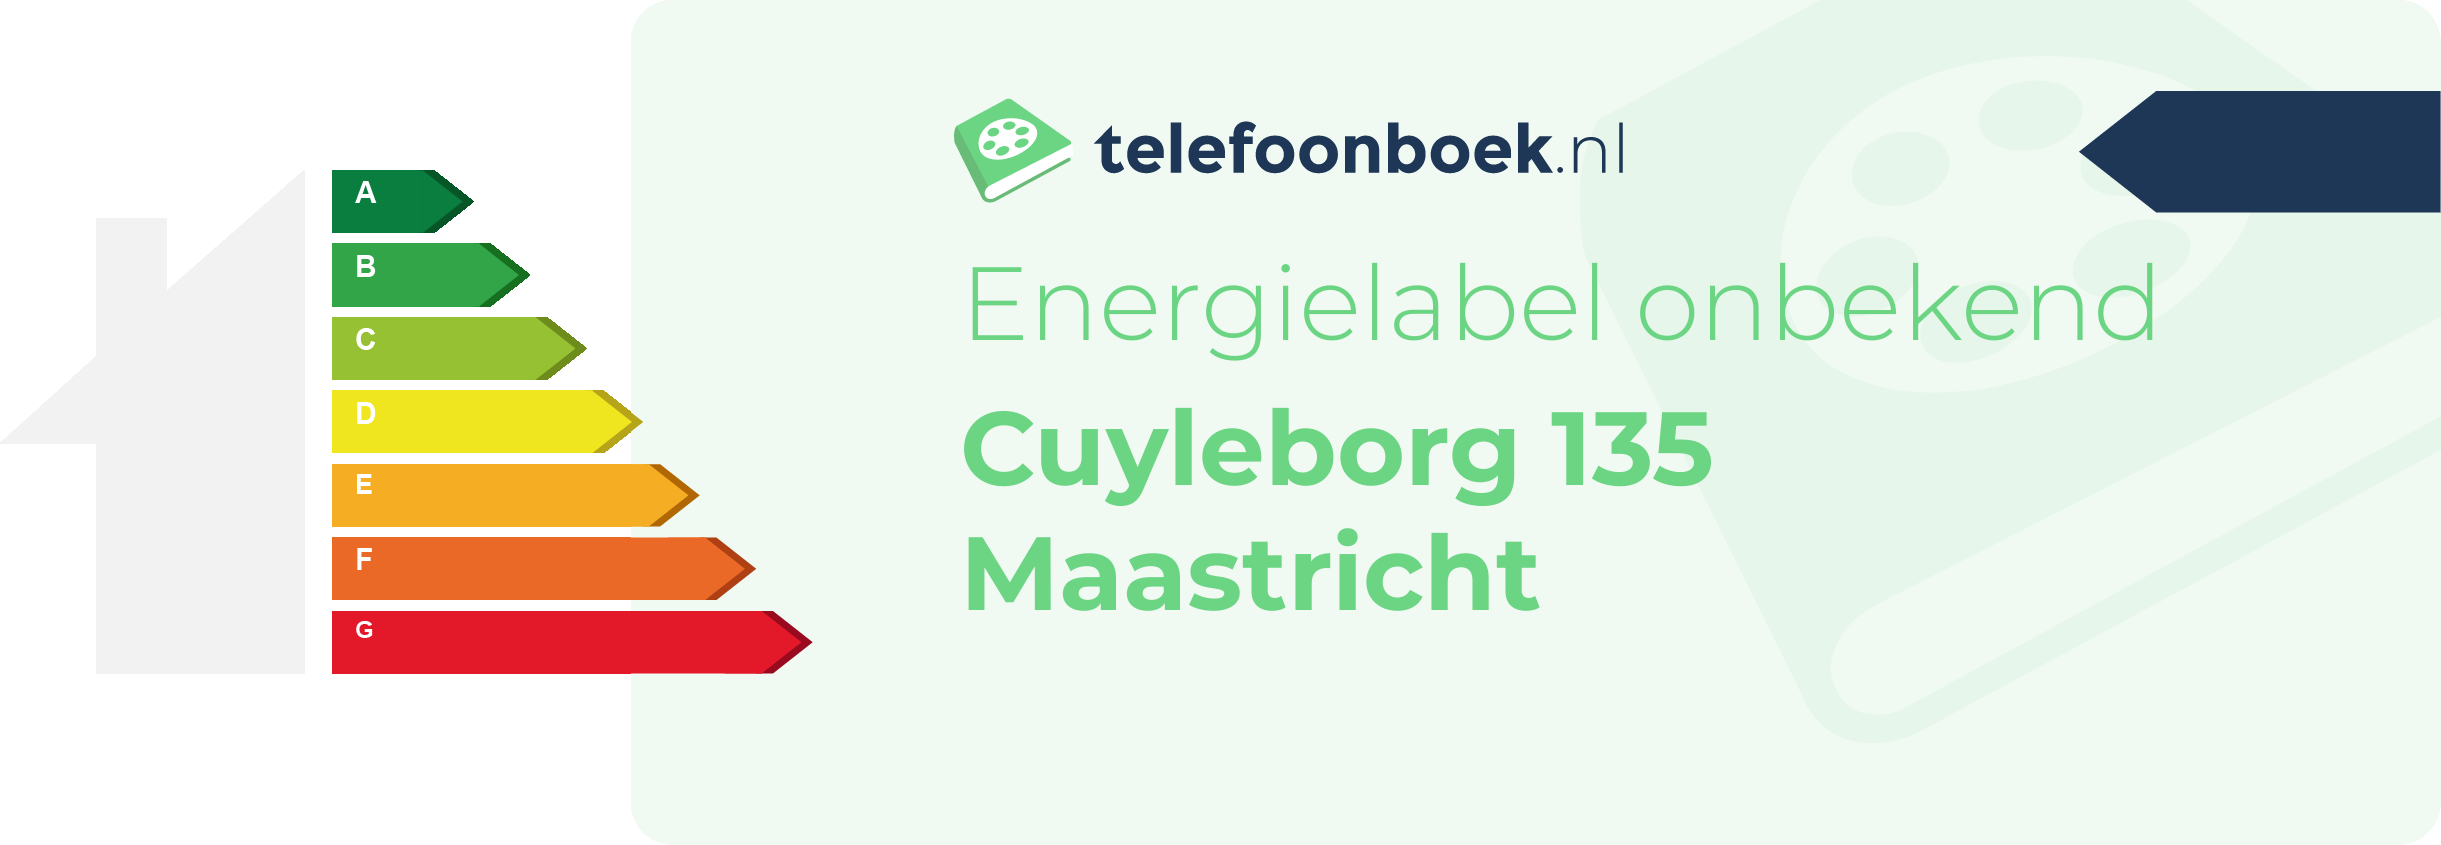 Energielabel Cuyleborg 135 Maastricht